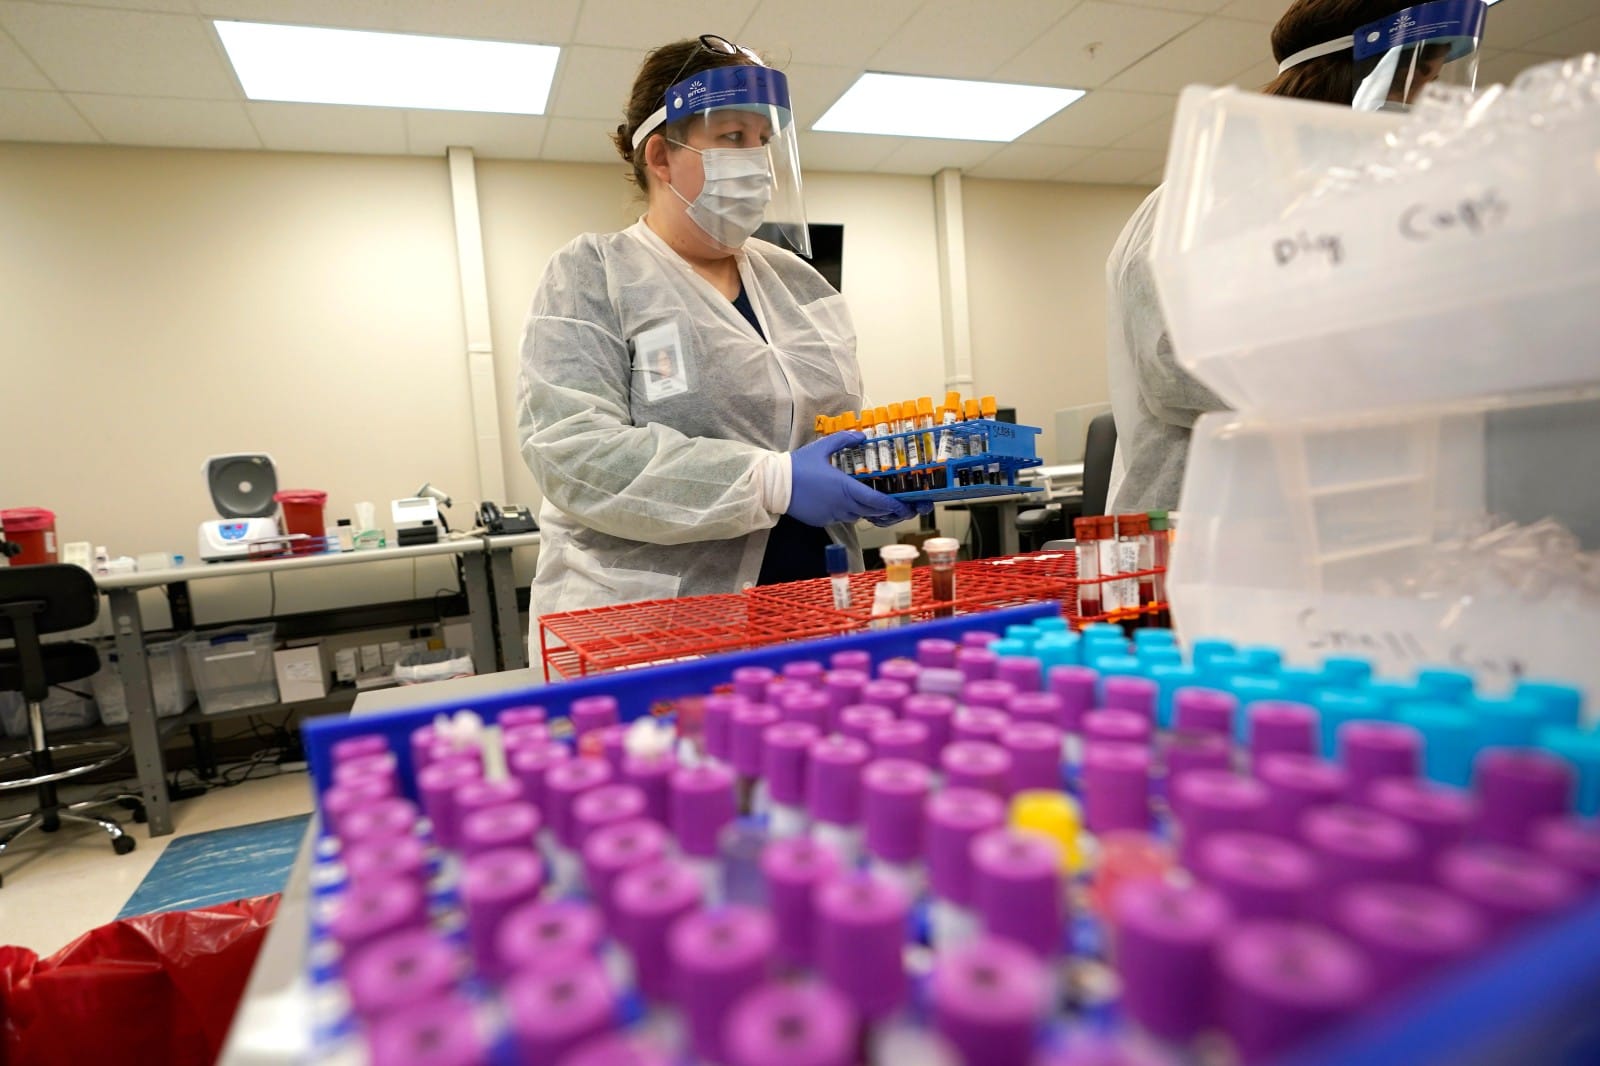 NPR: Dr. Khare explains COVID-19 antibody testing